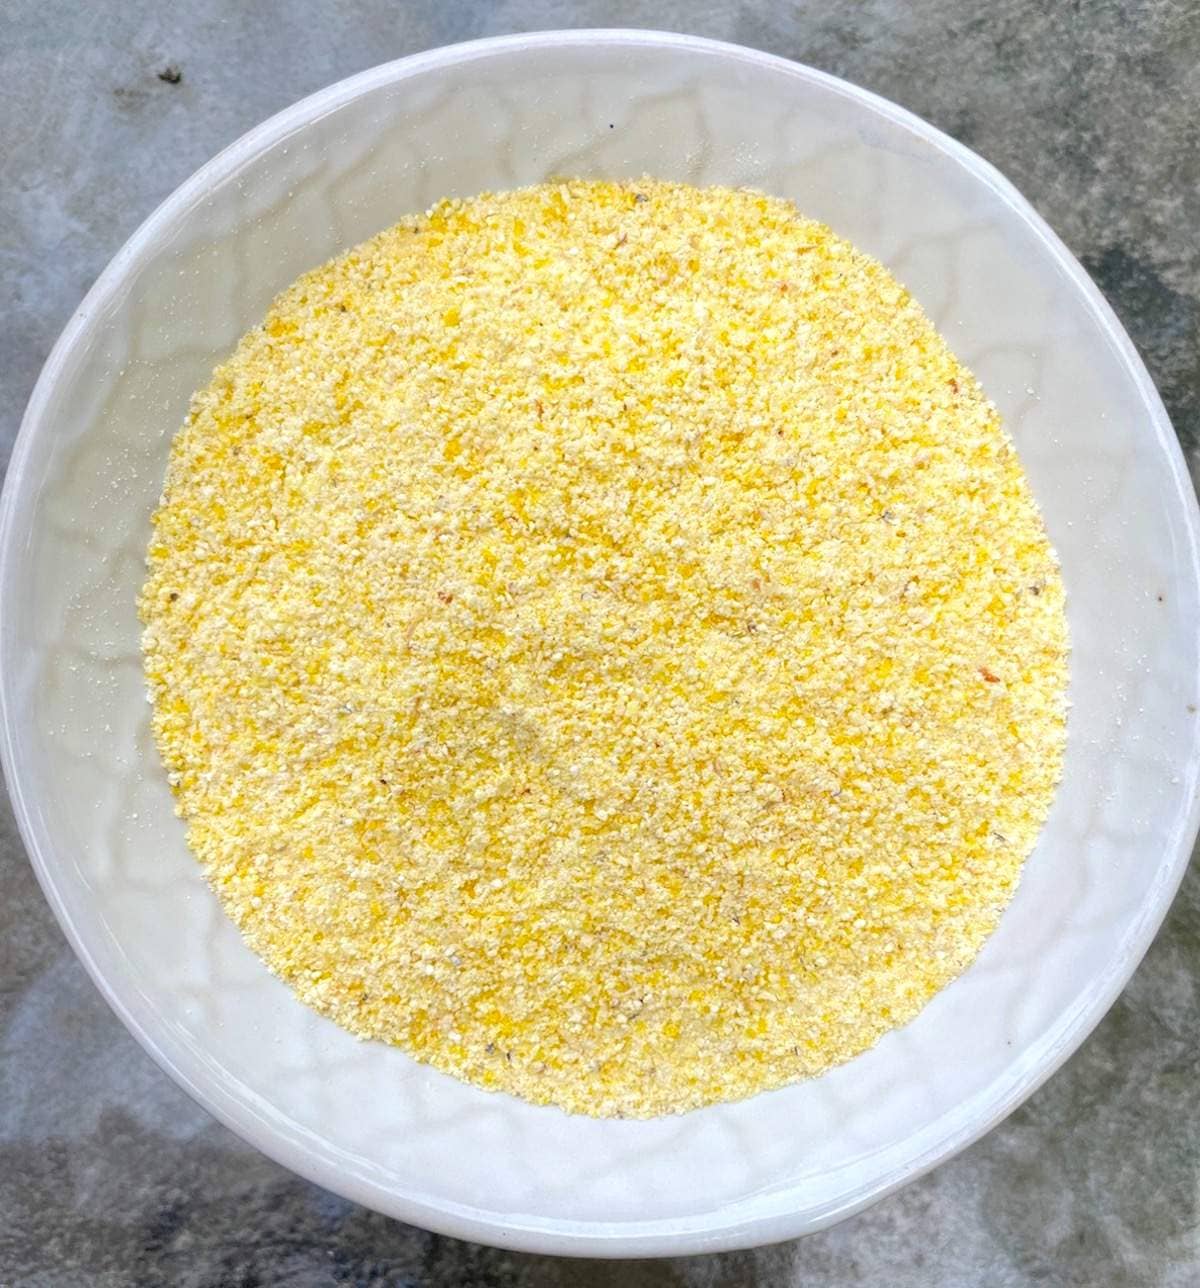 A small white bowl of yellow cornmeal.